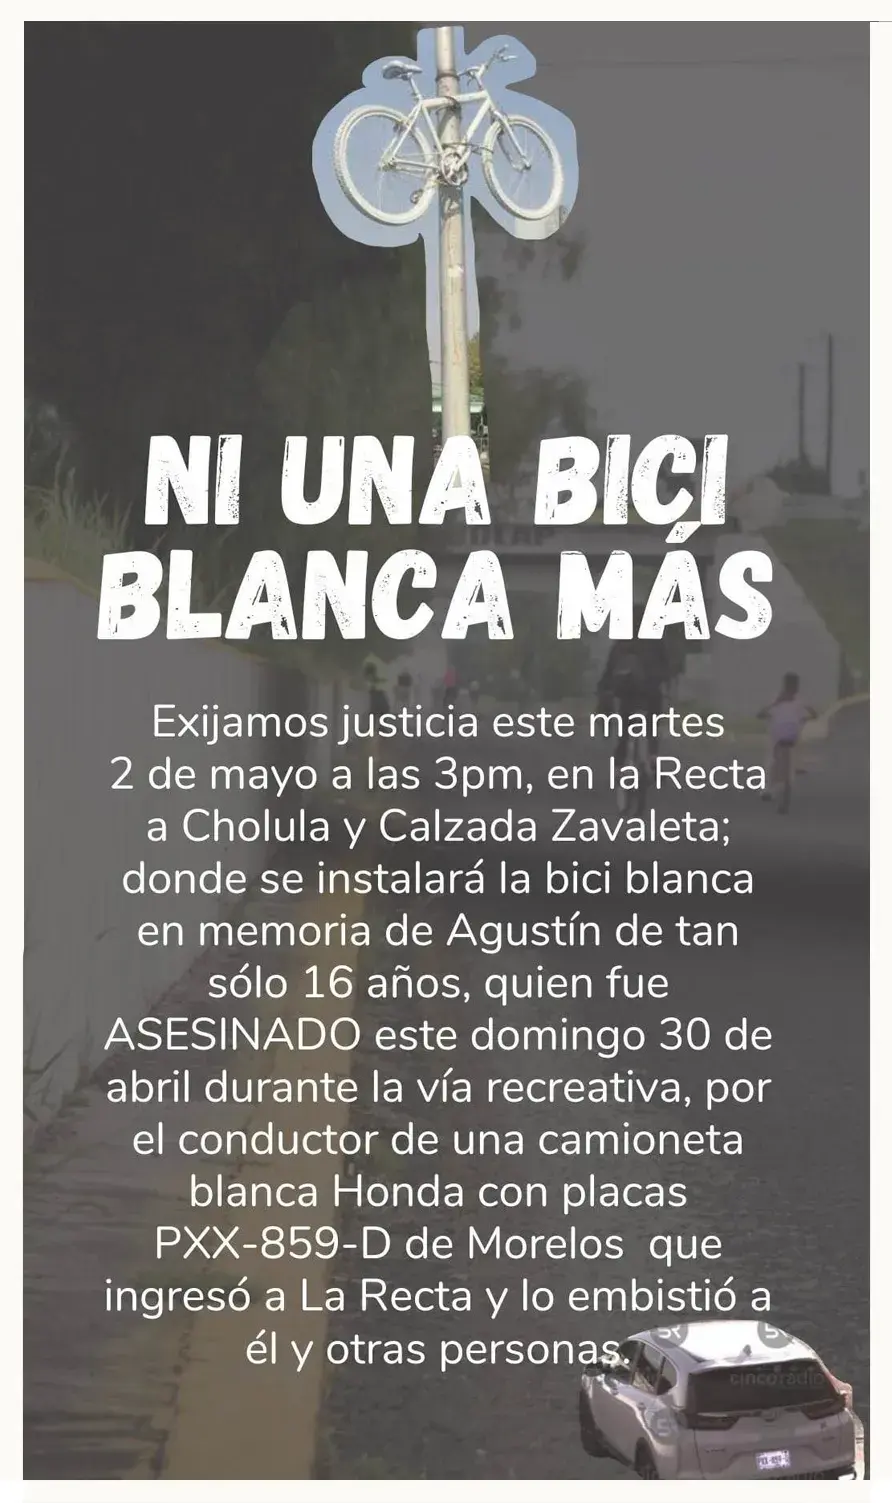 Colocarán ciclistas bici blanca en la Recta a Cholula en memoria de Agustín.